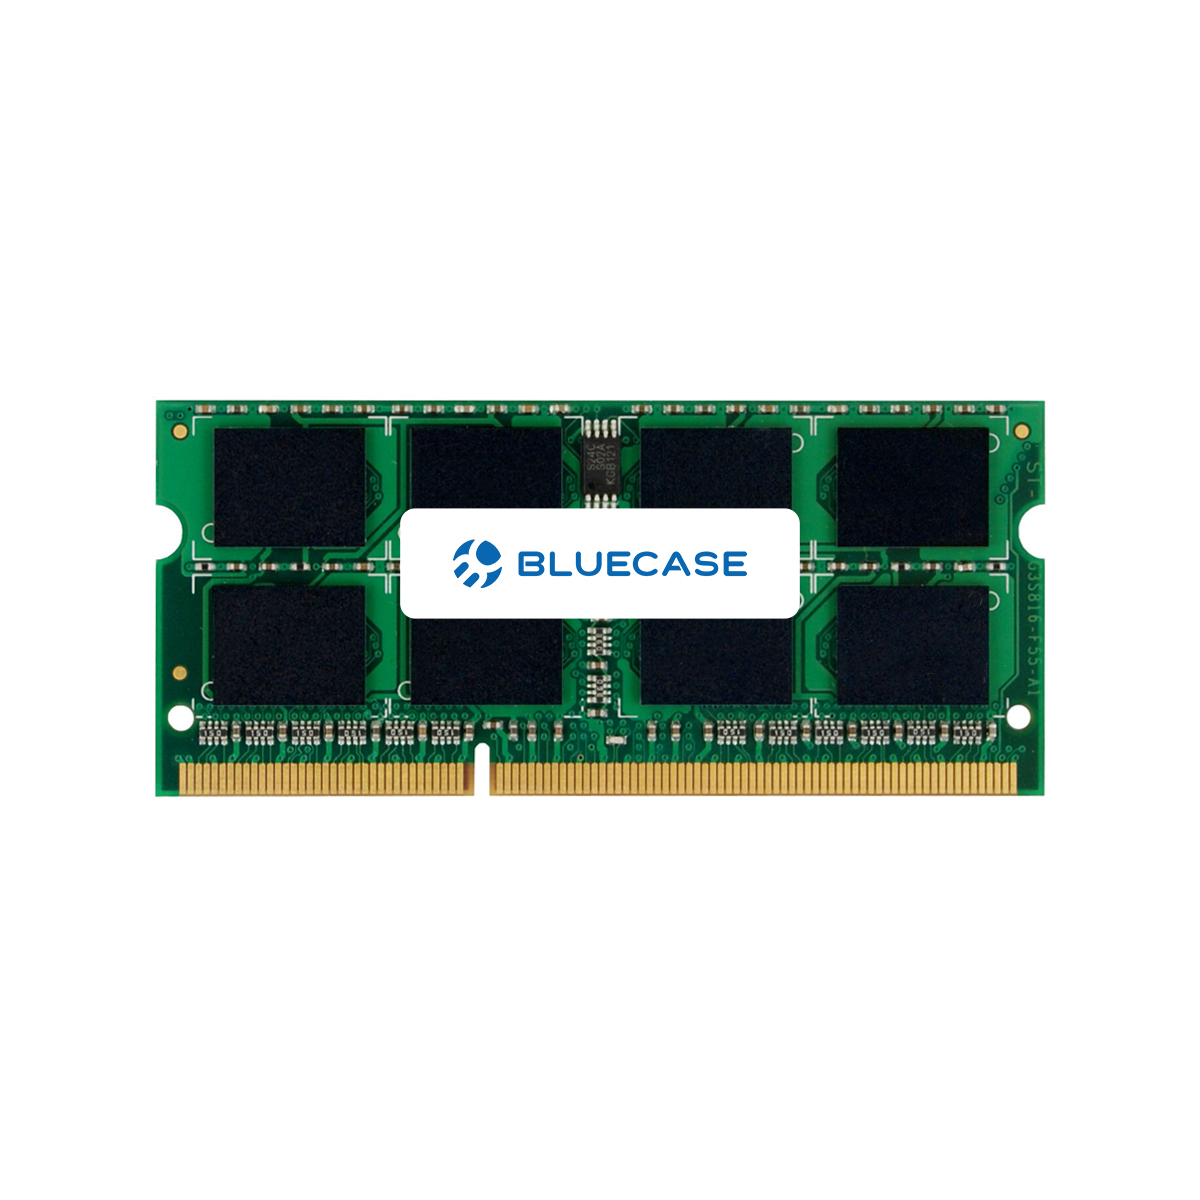 MEMÓRIA RAM DDR3 1333MHz SODIMM LOW VOLTAGE 1,35V BMDSO3D13M135VS9/8G - 1